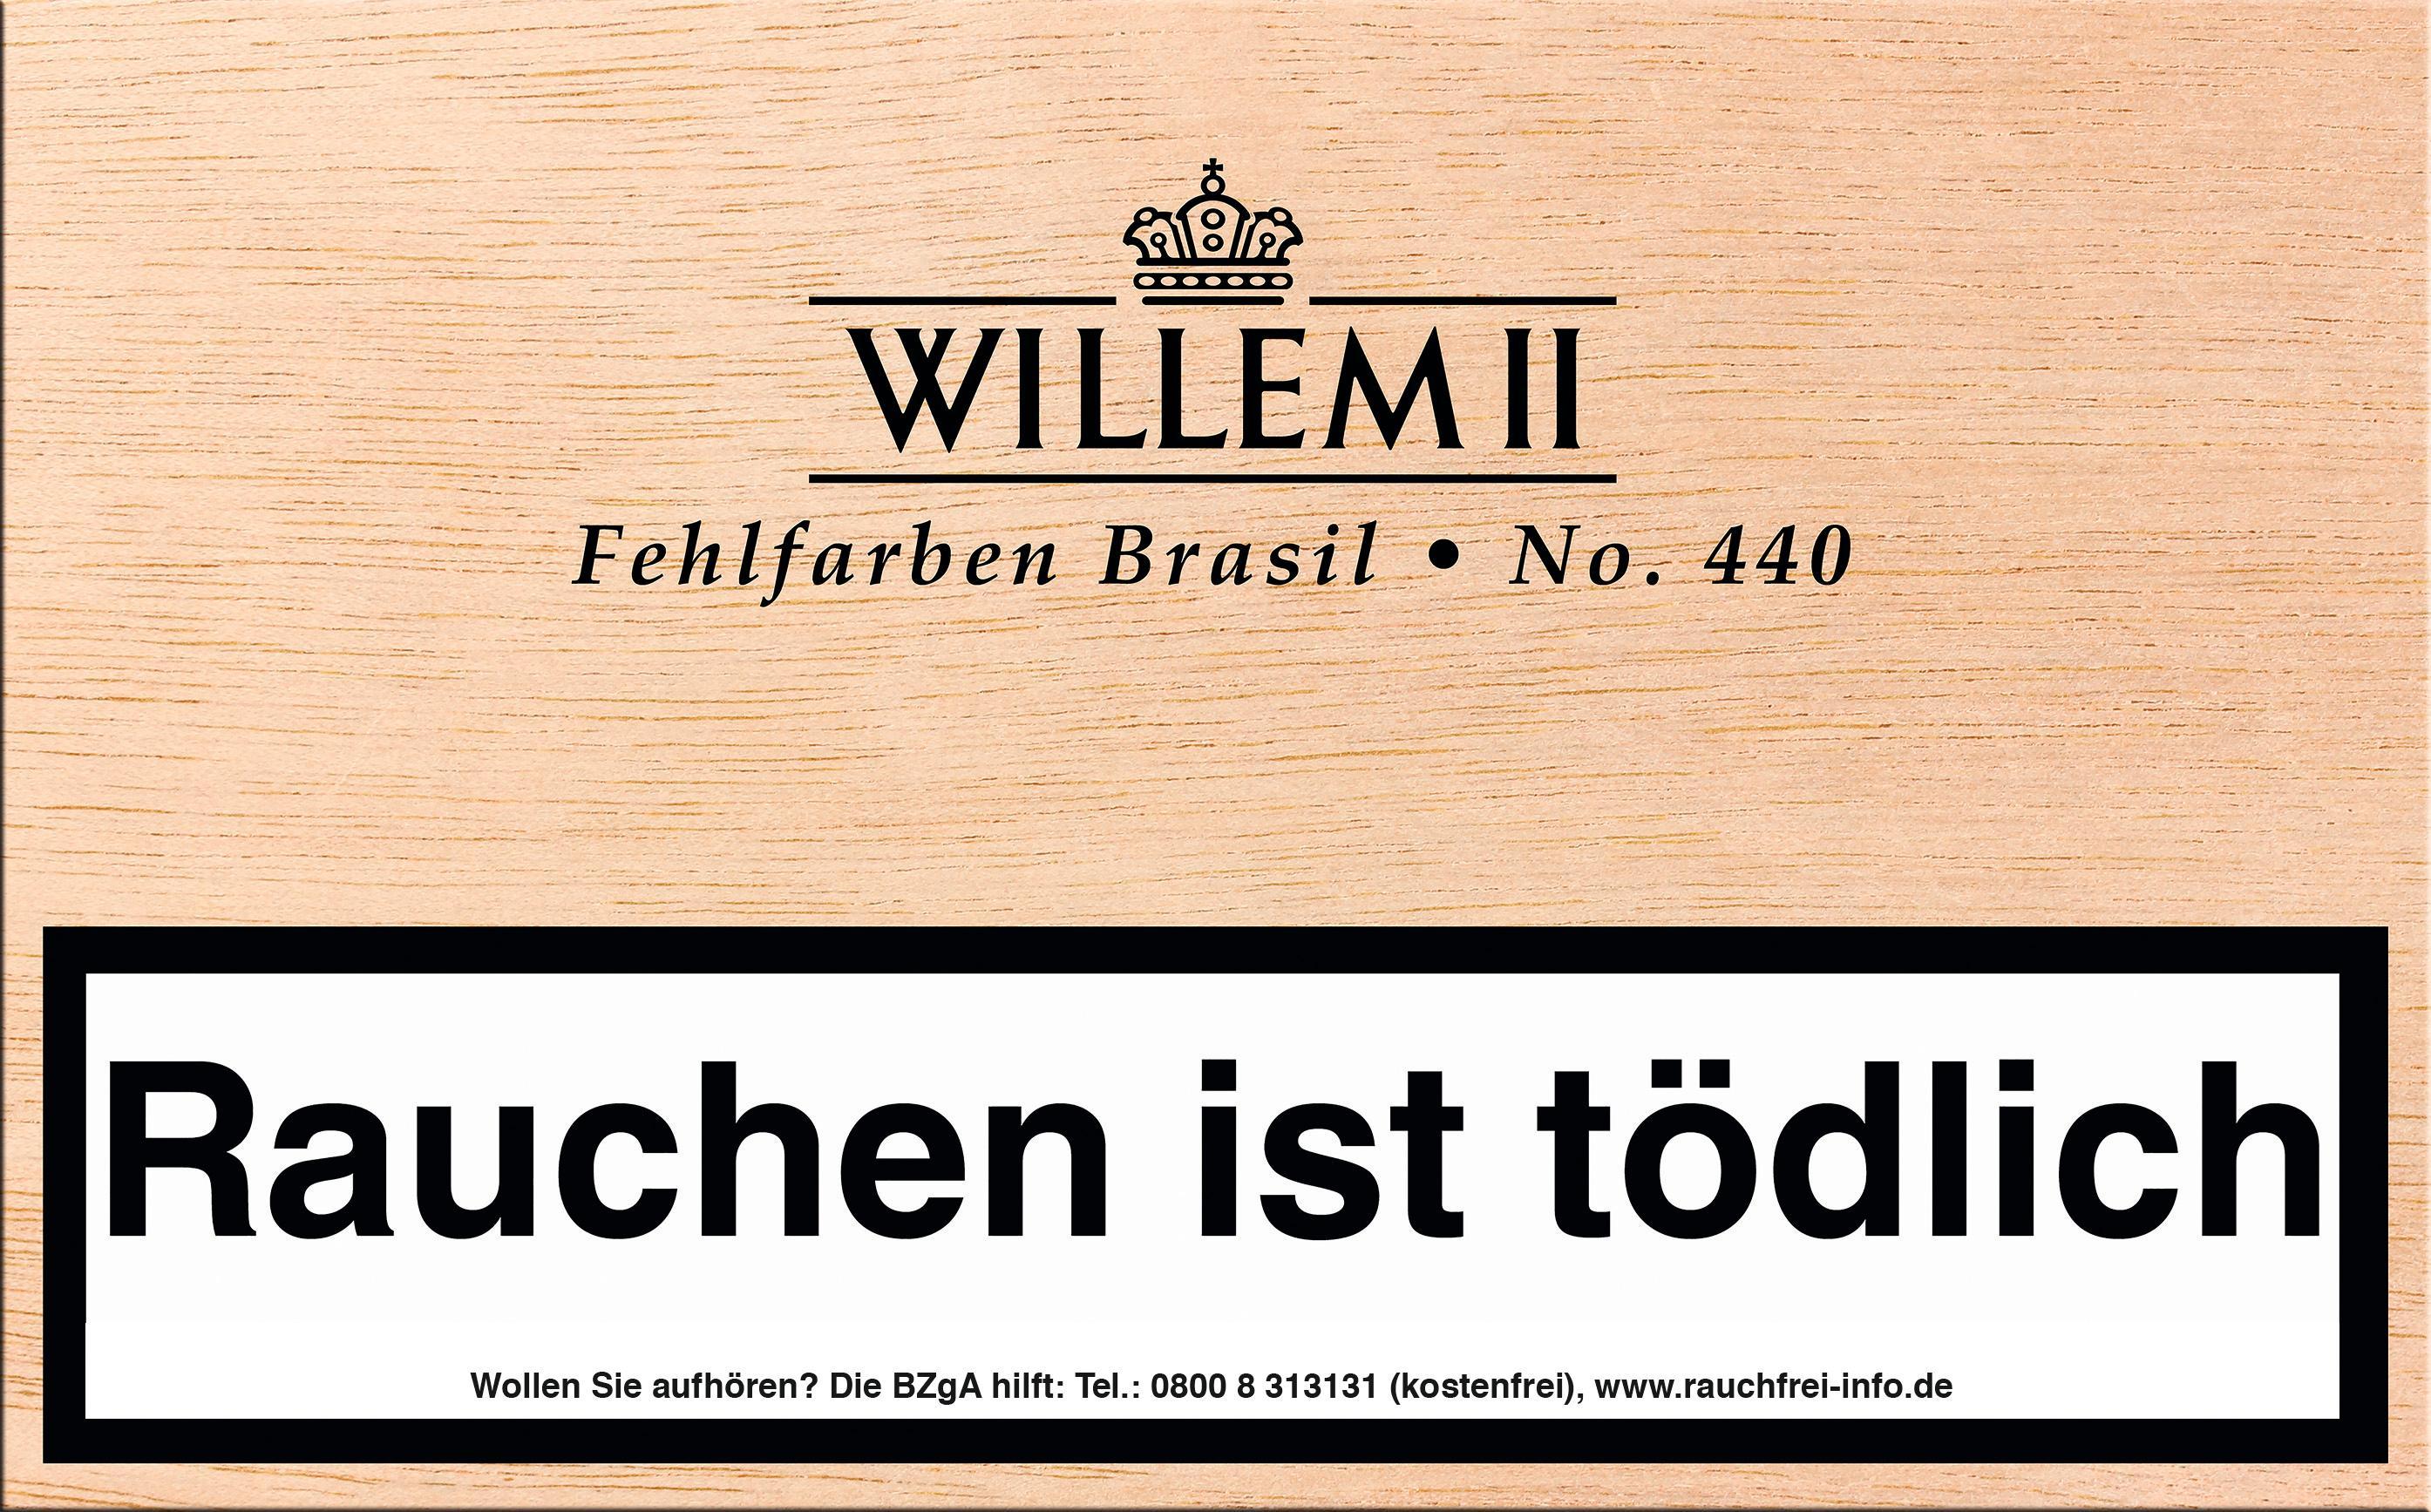 Willem II Fehlfarben Nr. 440 Brasil  1 x 50 Zigarillos